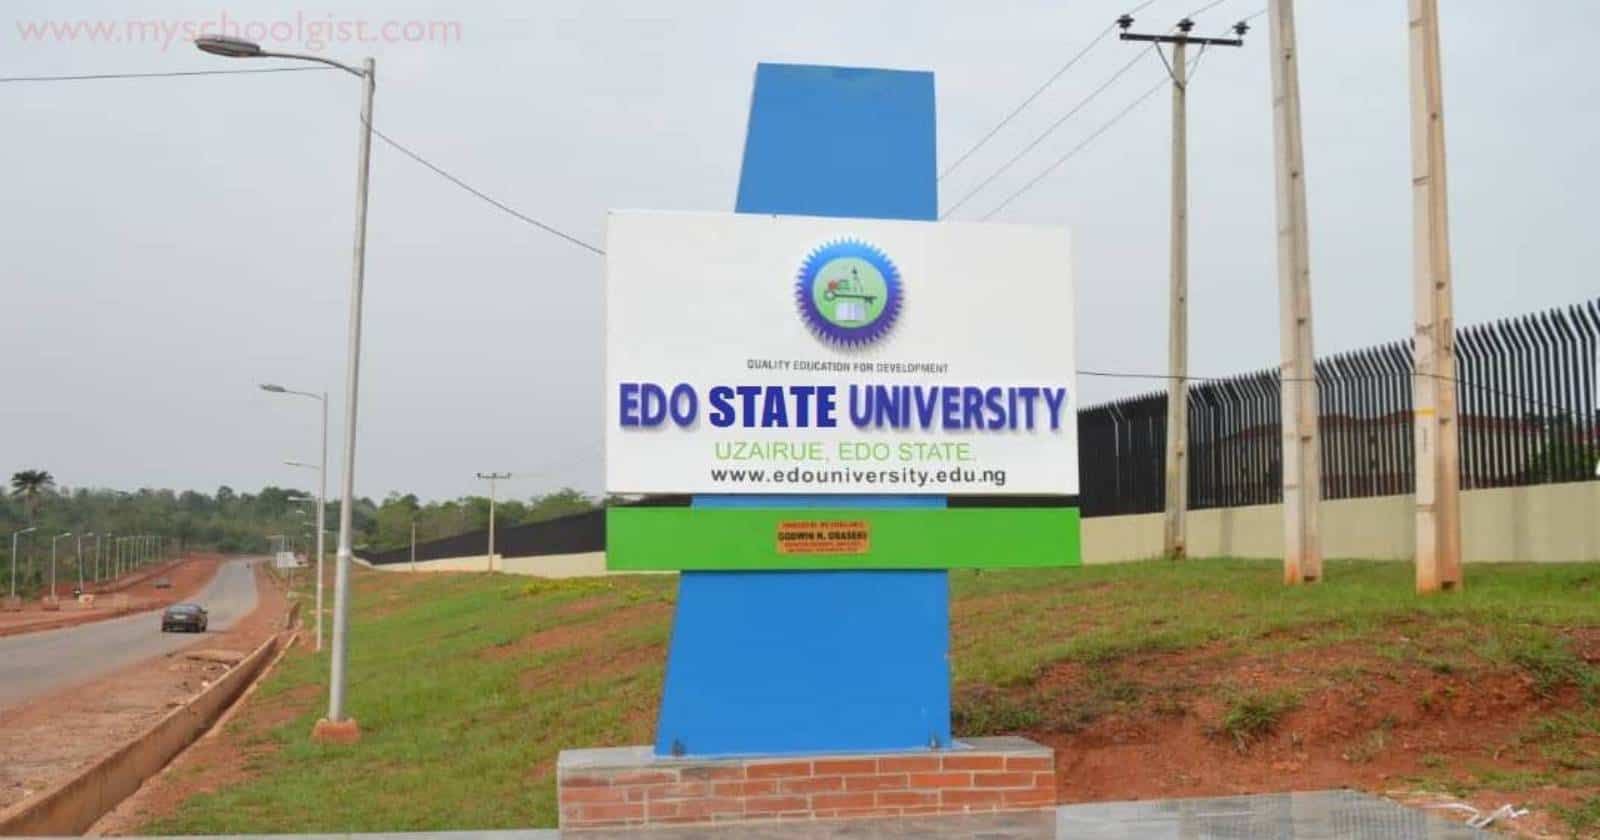 Edo State University School Fees Schedule 2023/2024